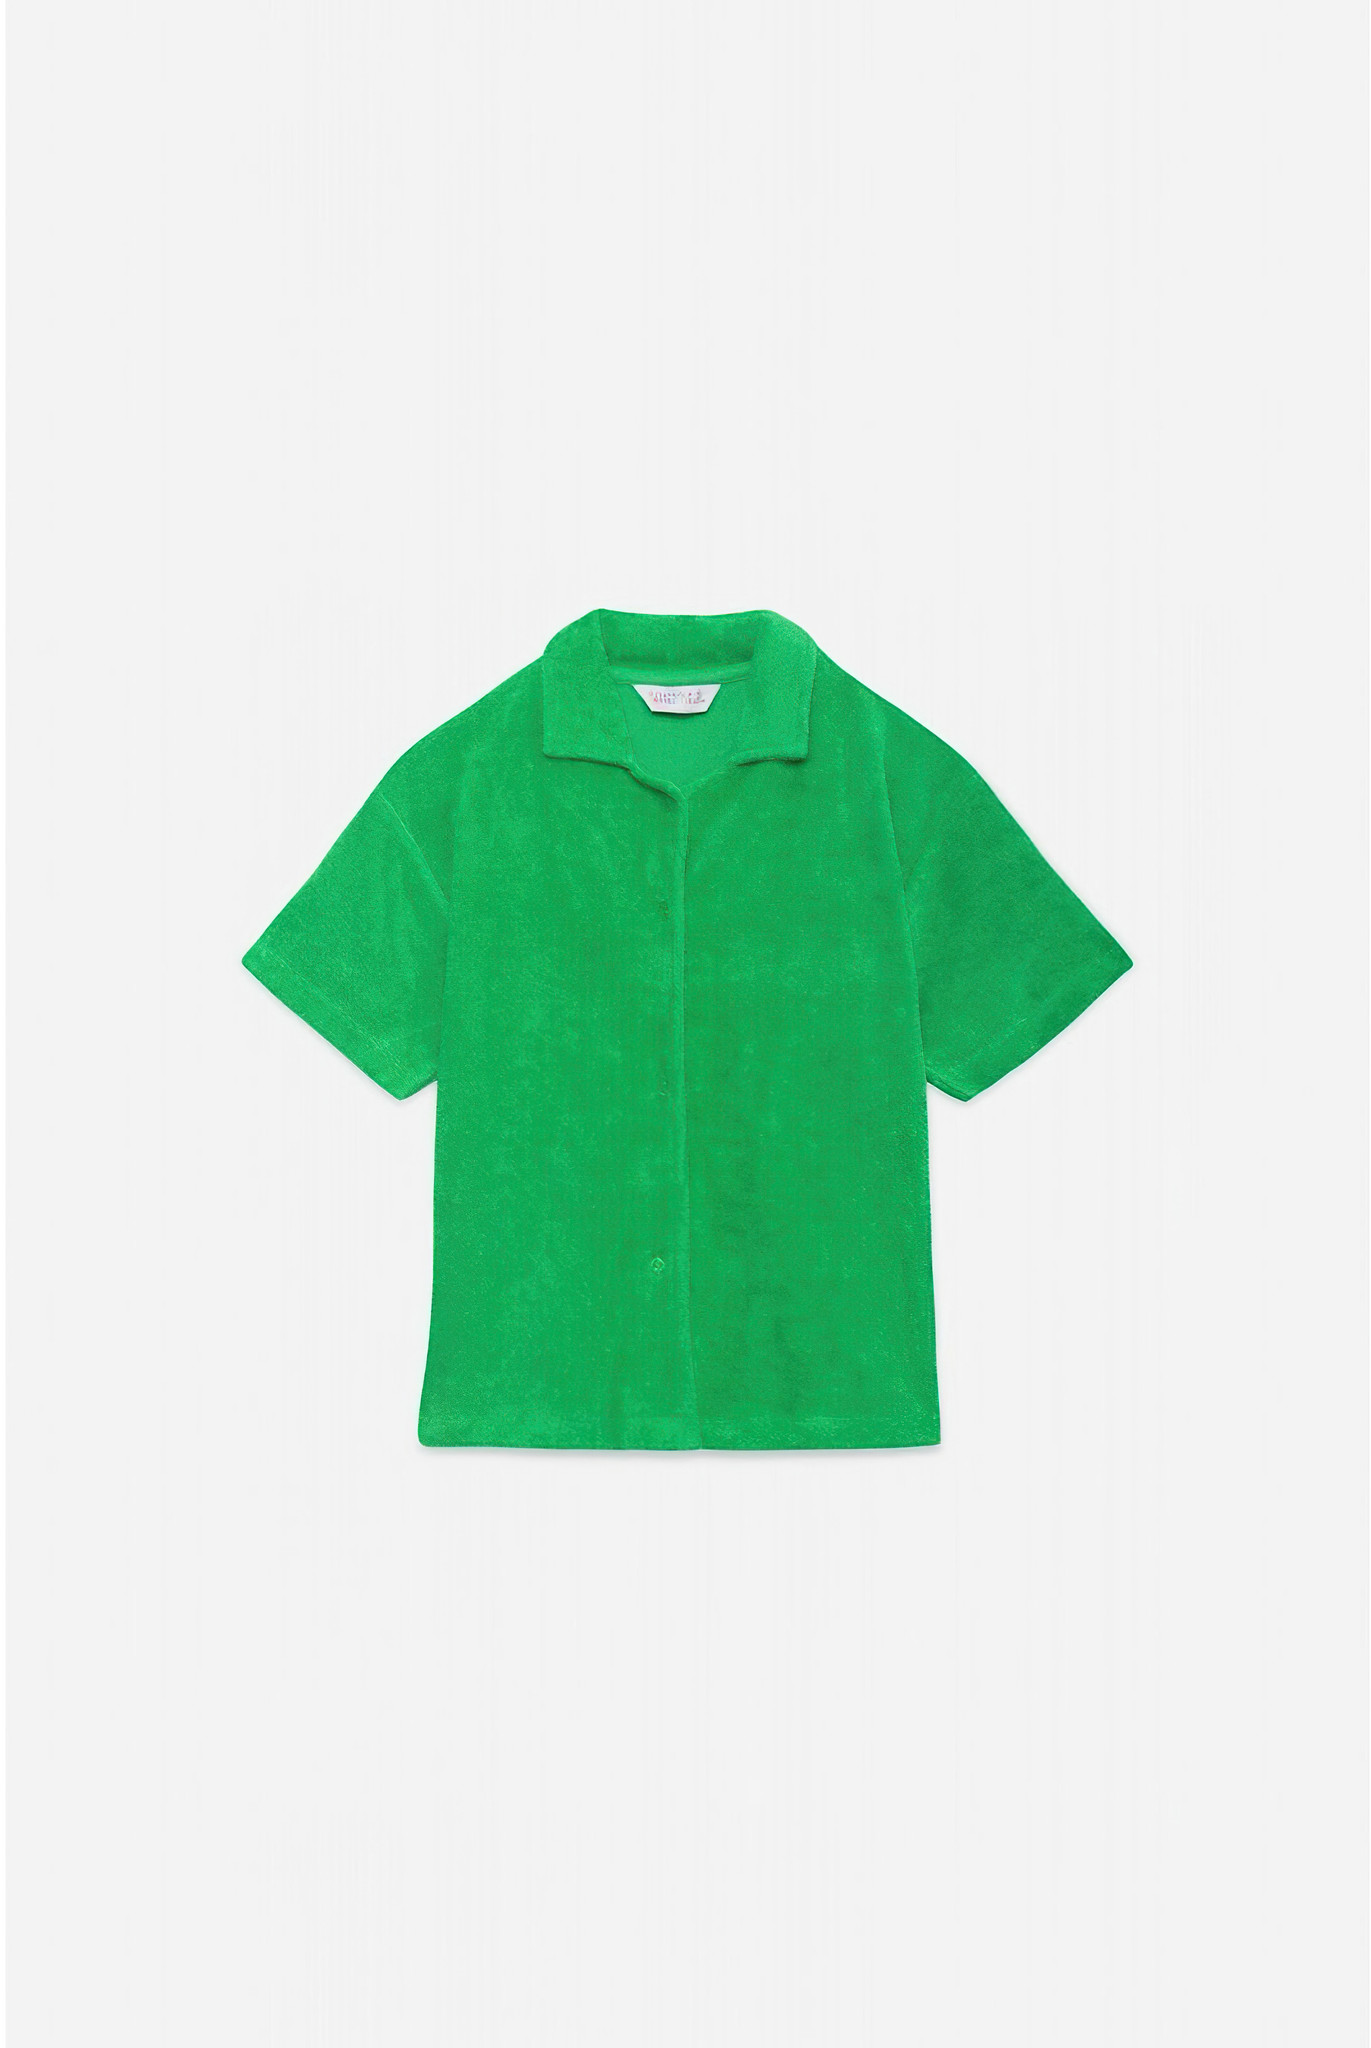 Strut Yo Fluff Green Shirt-4